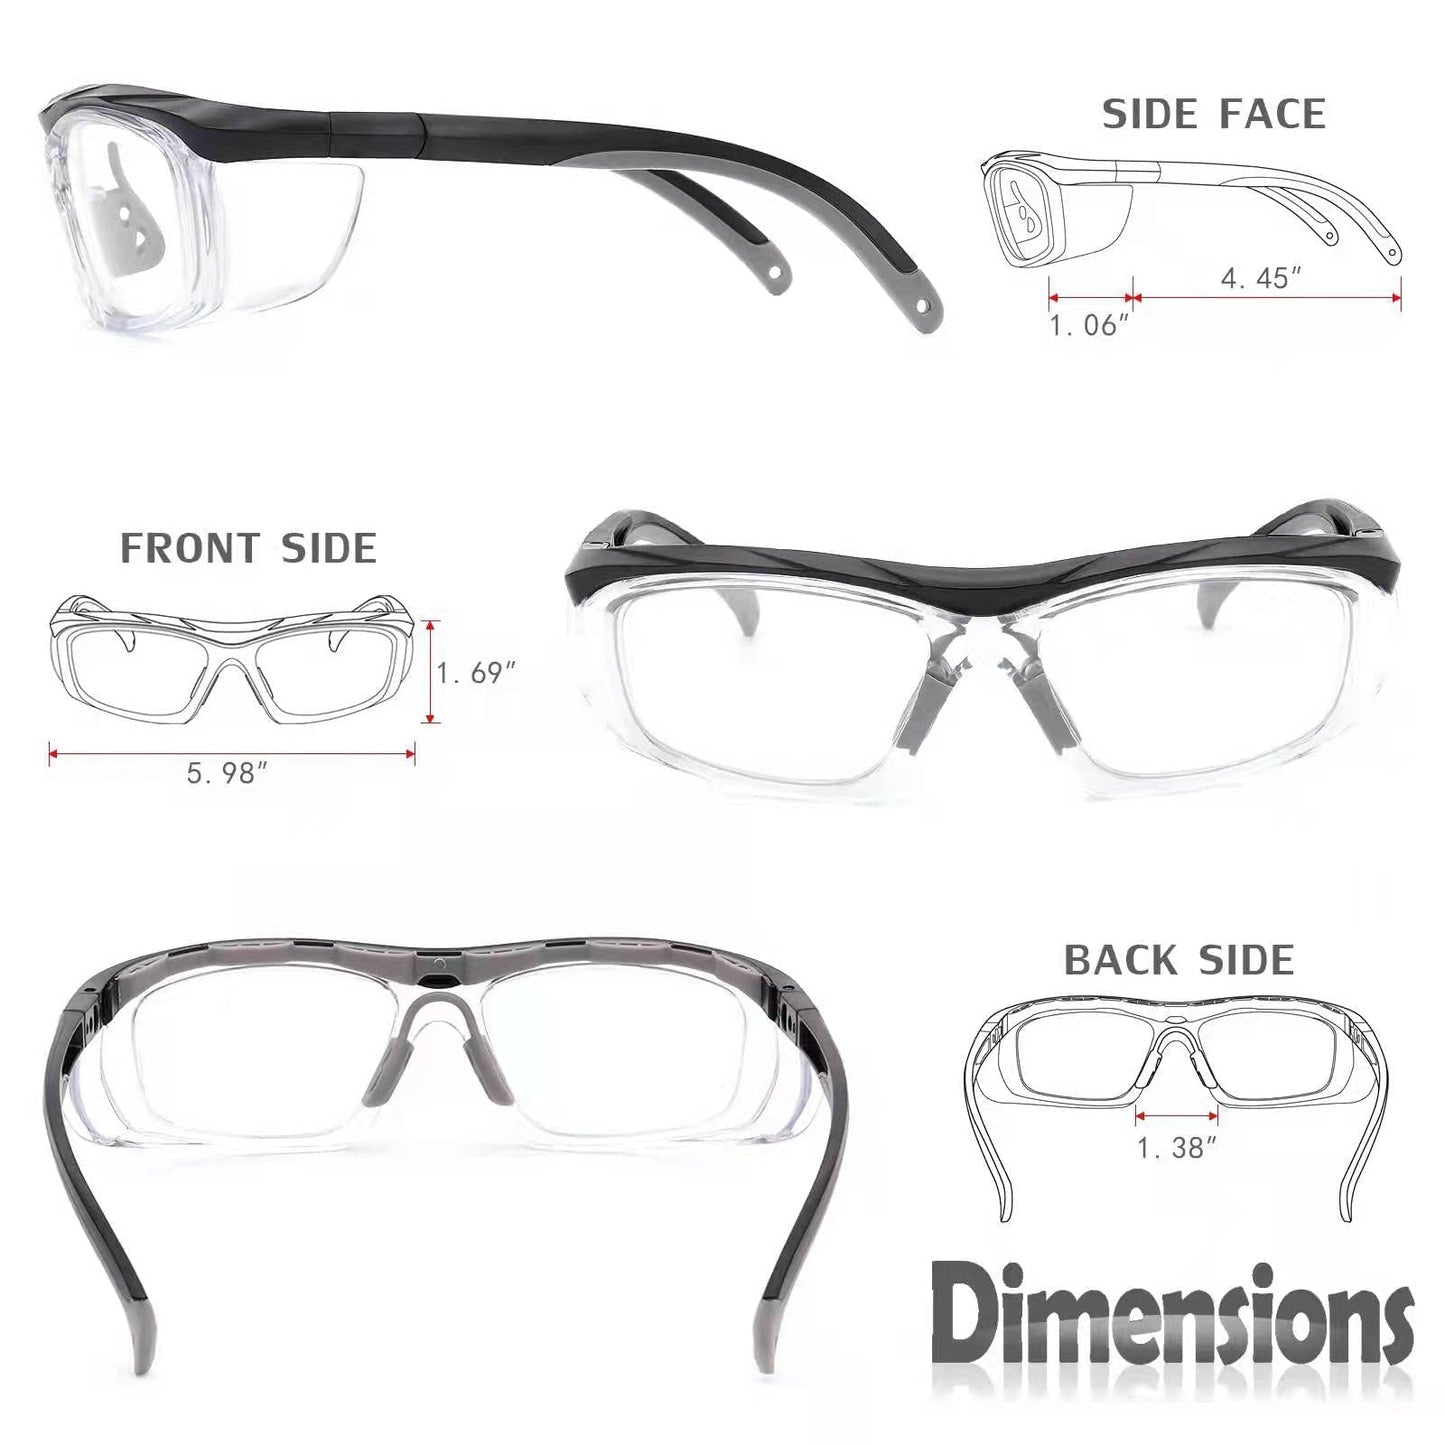 EYESafety Prescription Safety Glasses - Stylish Black-Blue Frames for Ultimate Protection